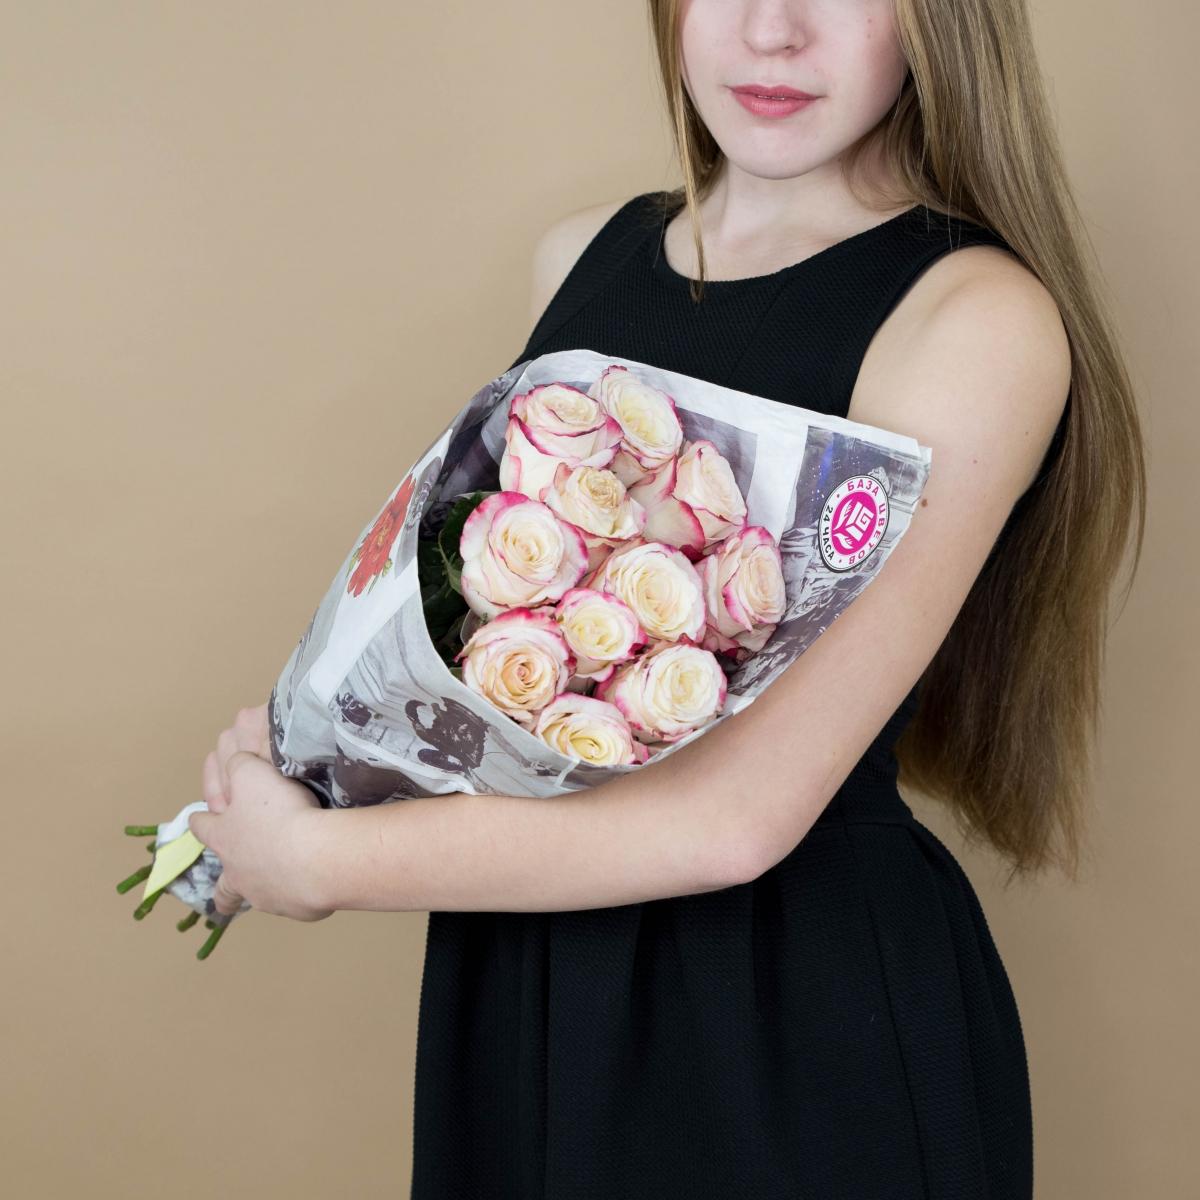 Розы красно-белые 11 шт. (40 см) (Артикул - 2108)